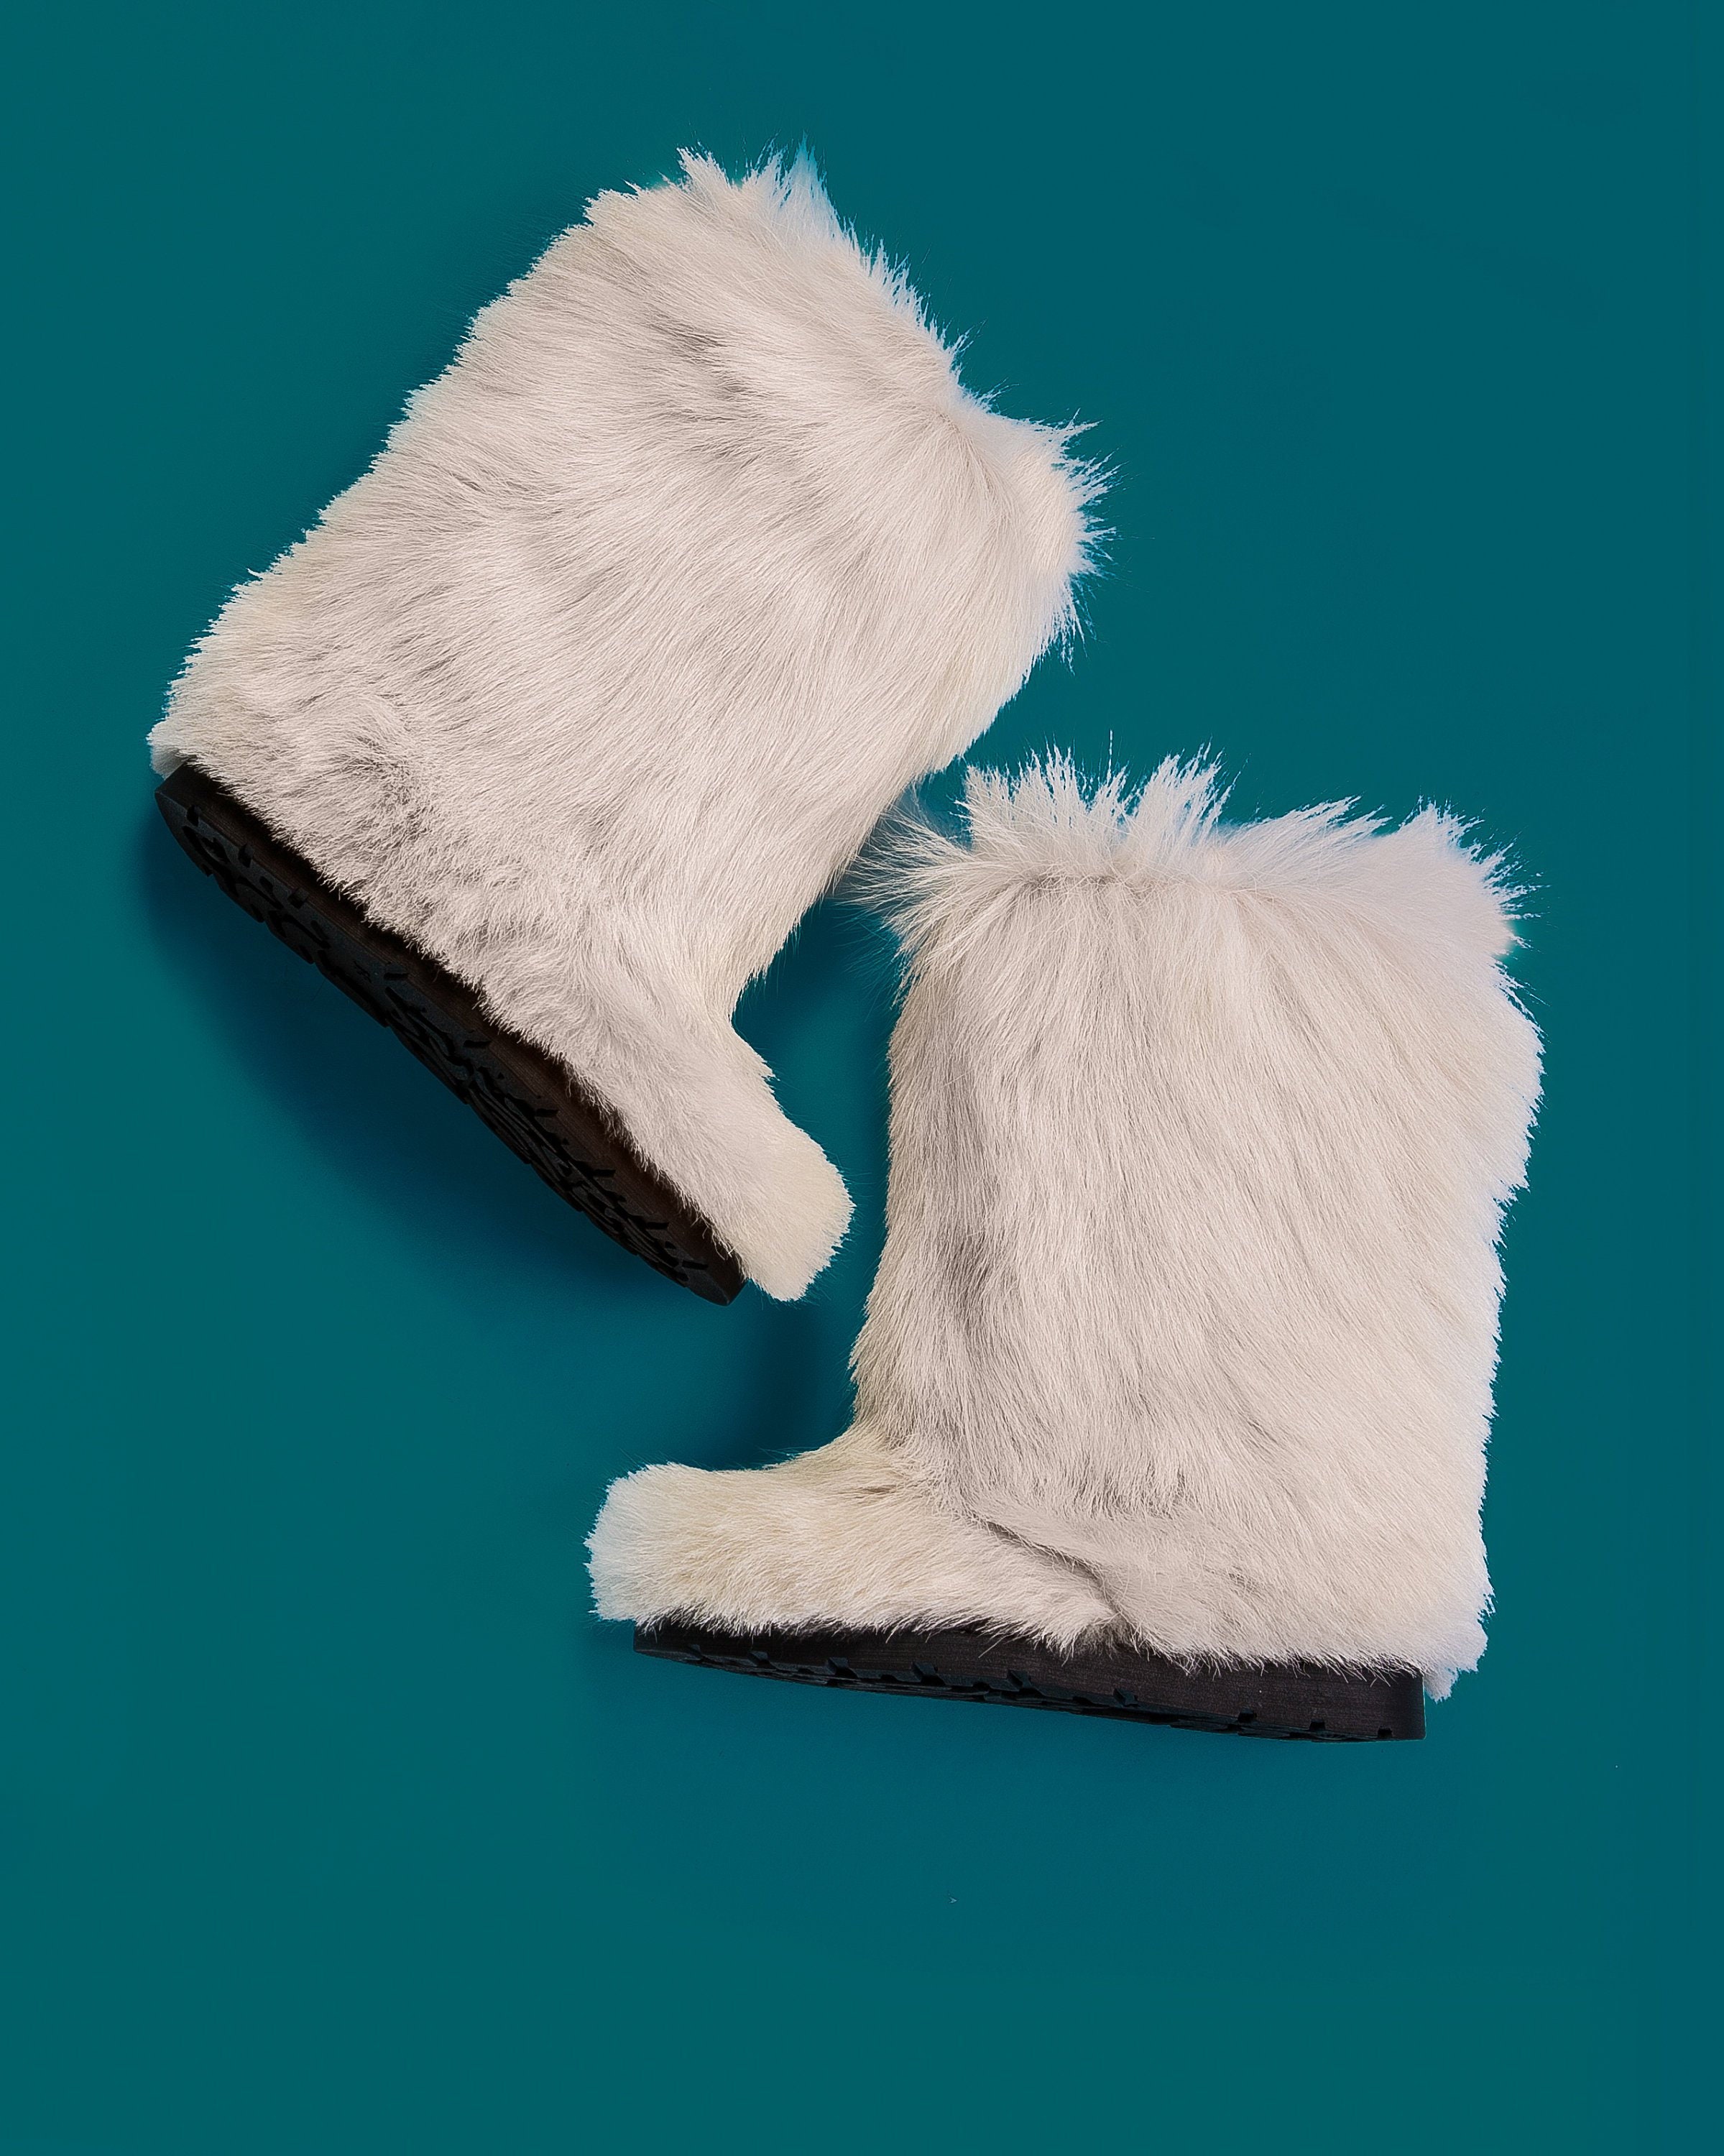 white fur boots